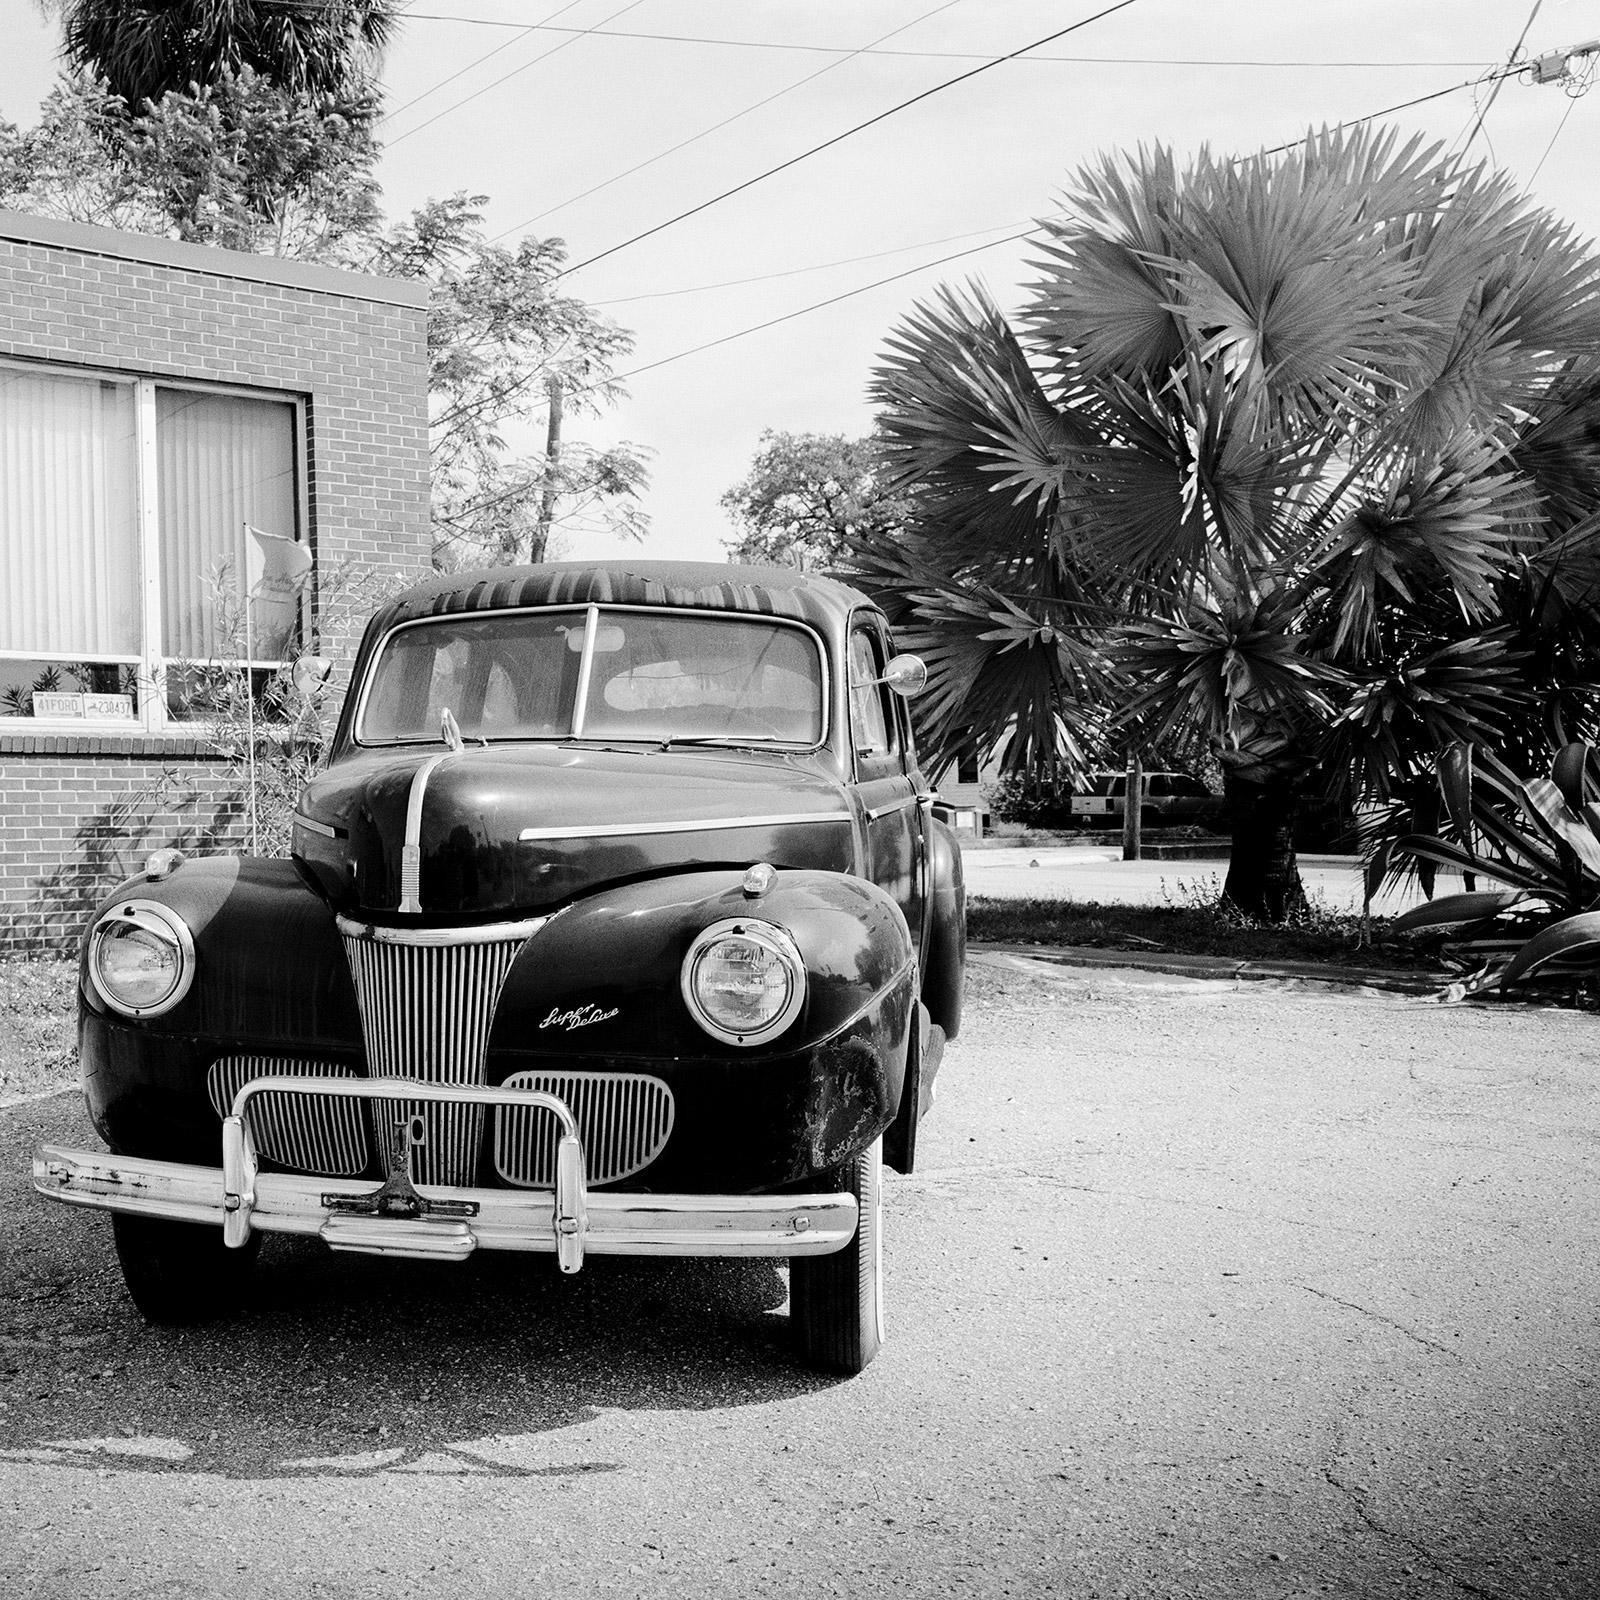 1941 Ford Super Deluxe Business Coupe, USA, schwarz-weiße Fotografie, Landschaft